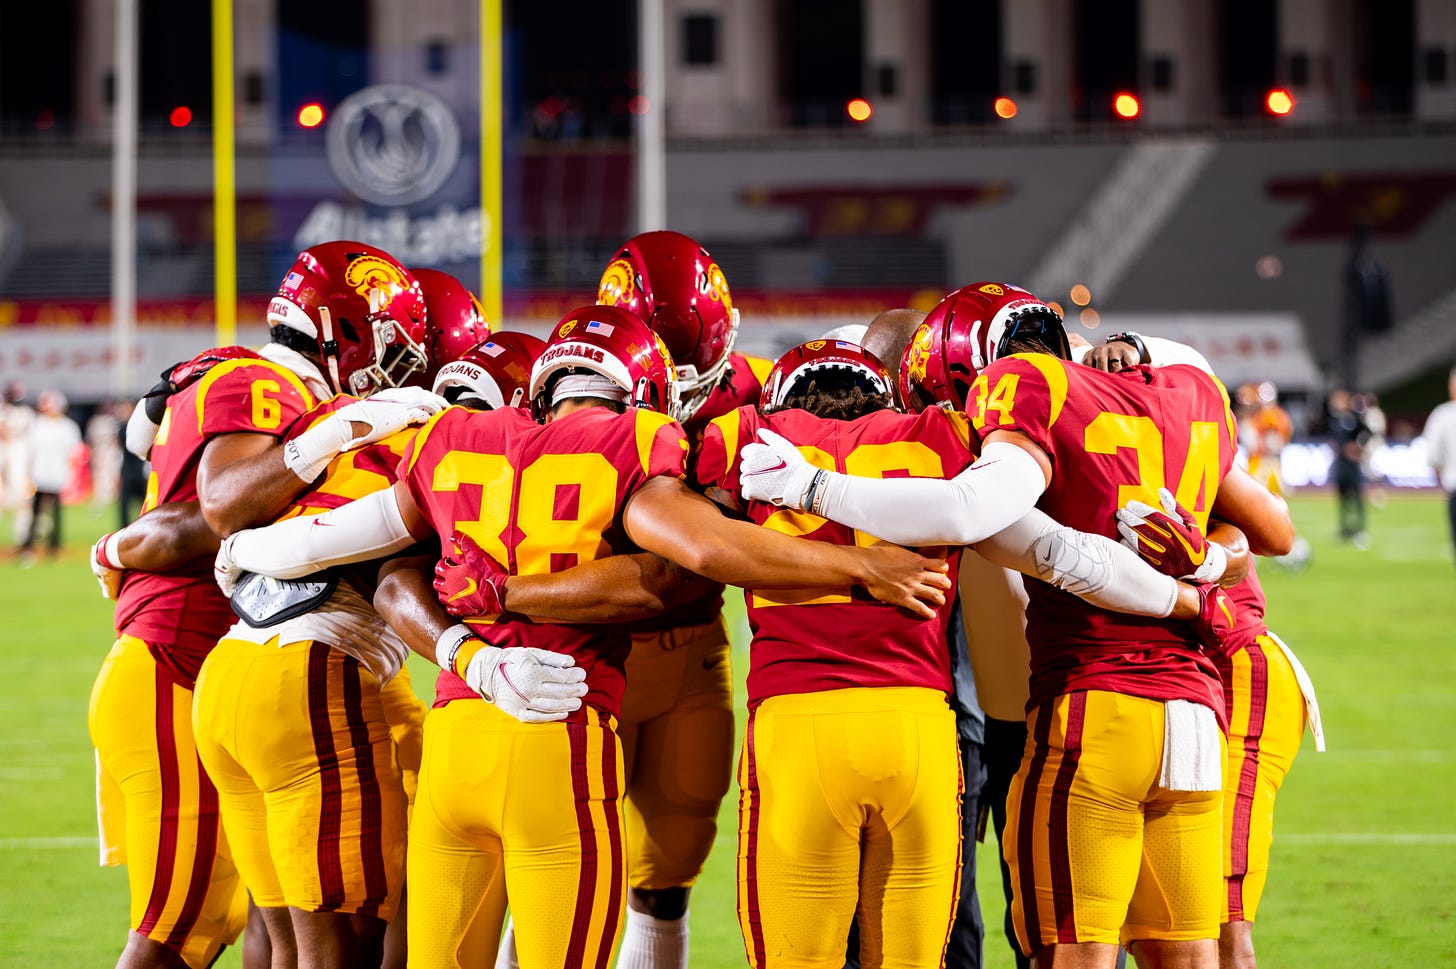 Fans can remain optimistic despite USC's struggles - Daily Trojan